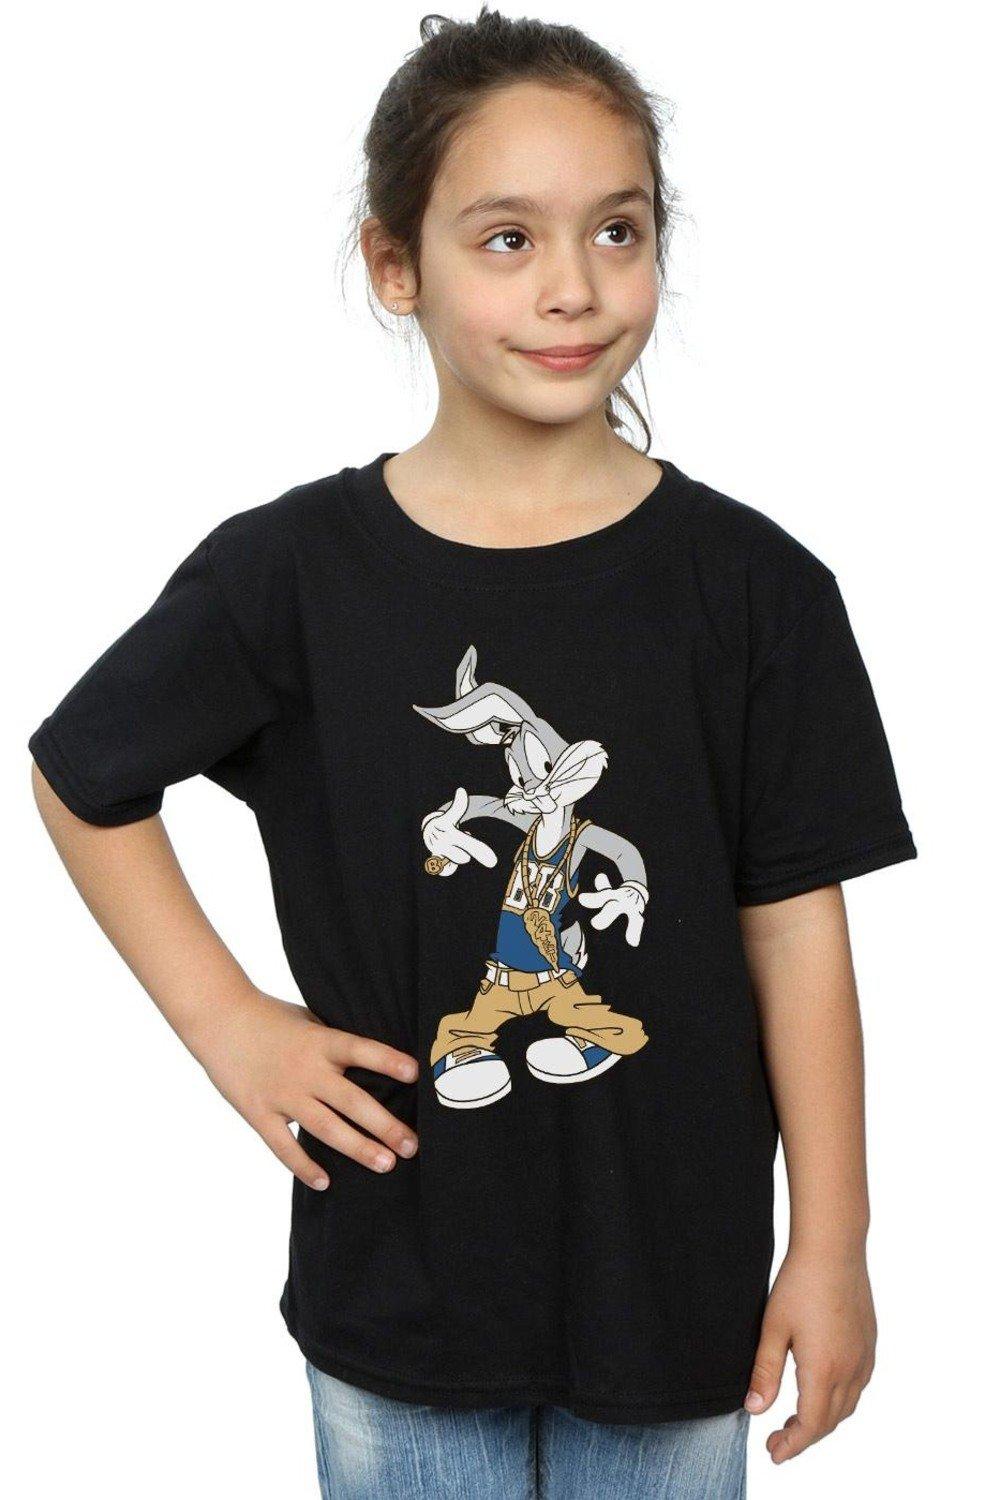 Bugs Bunny Rapper Cotton T-Shirt